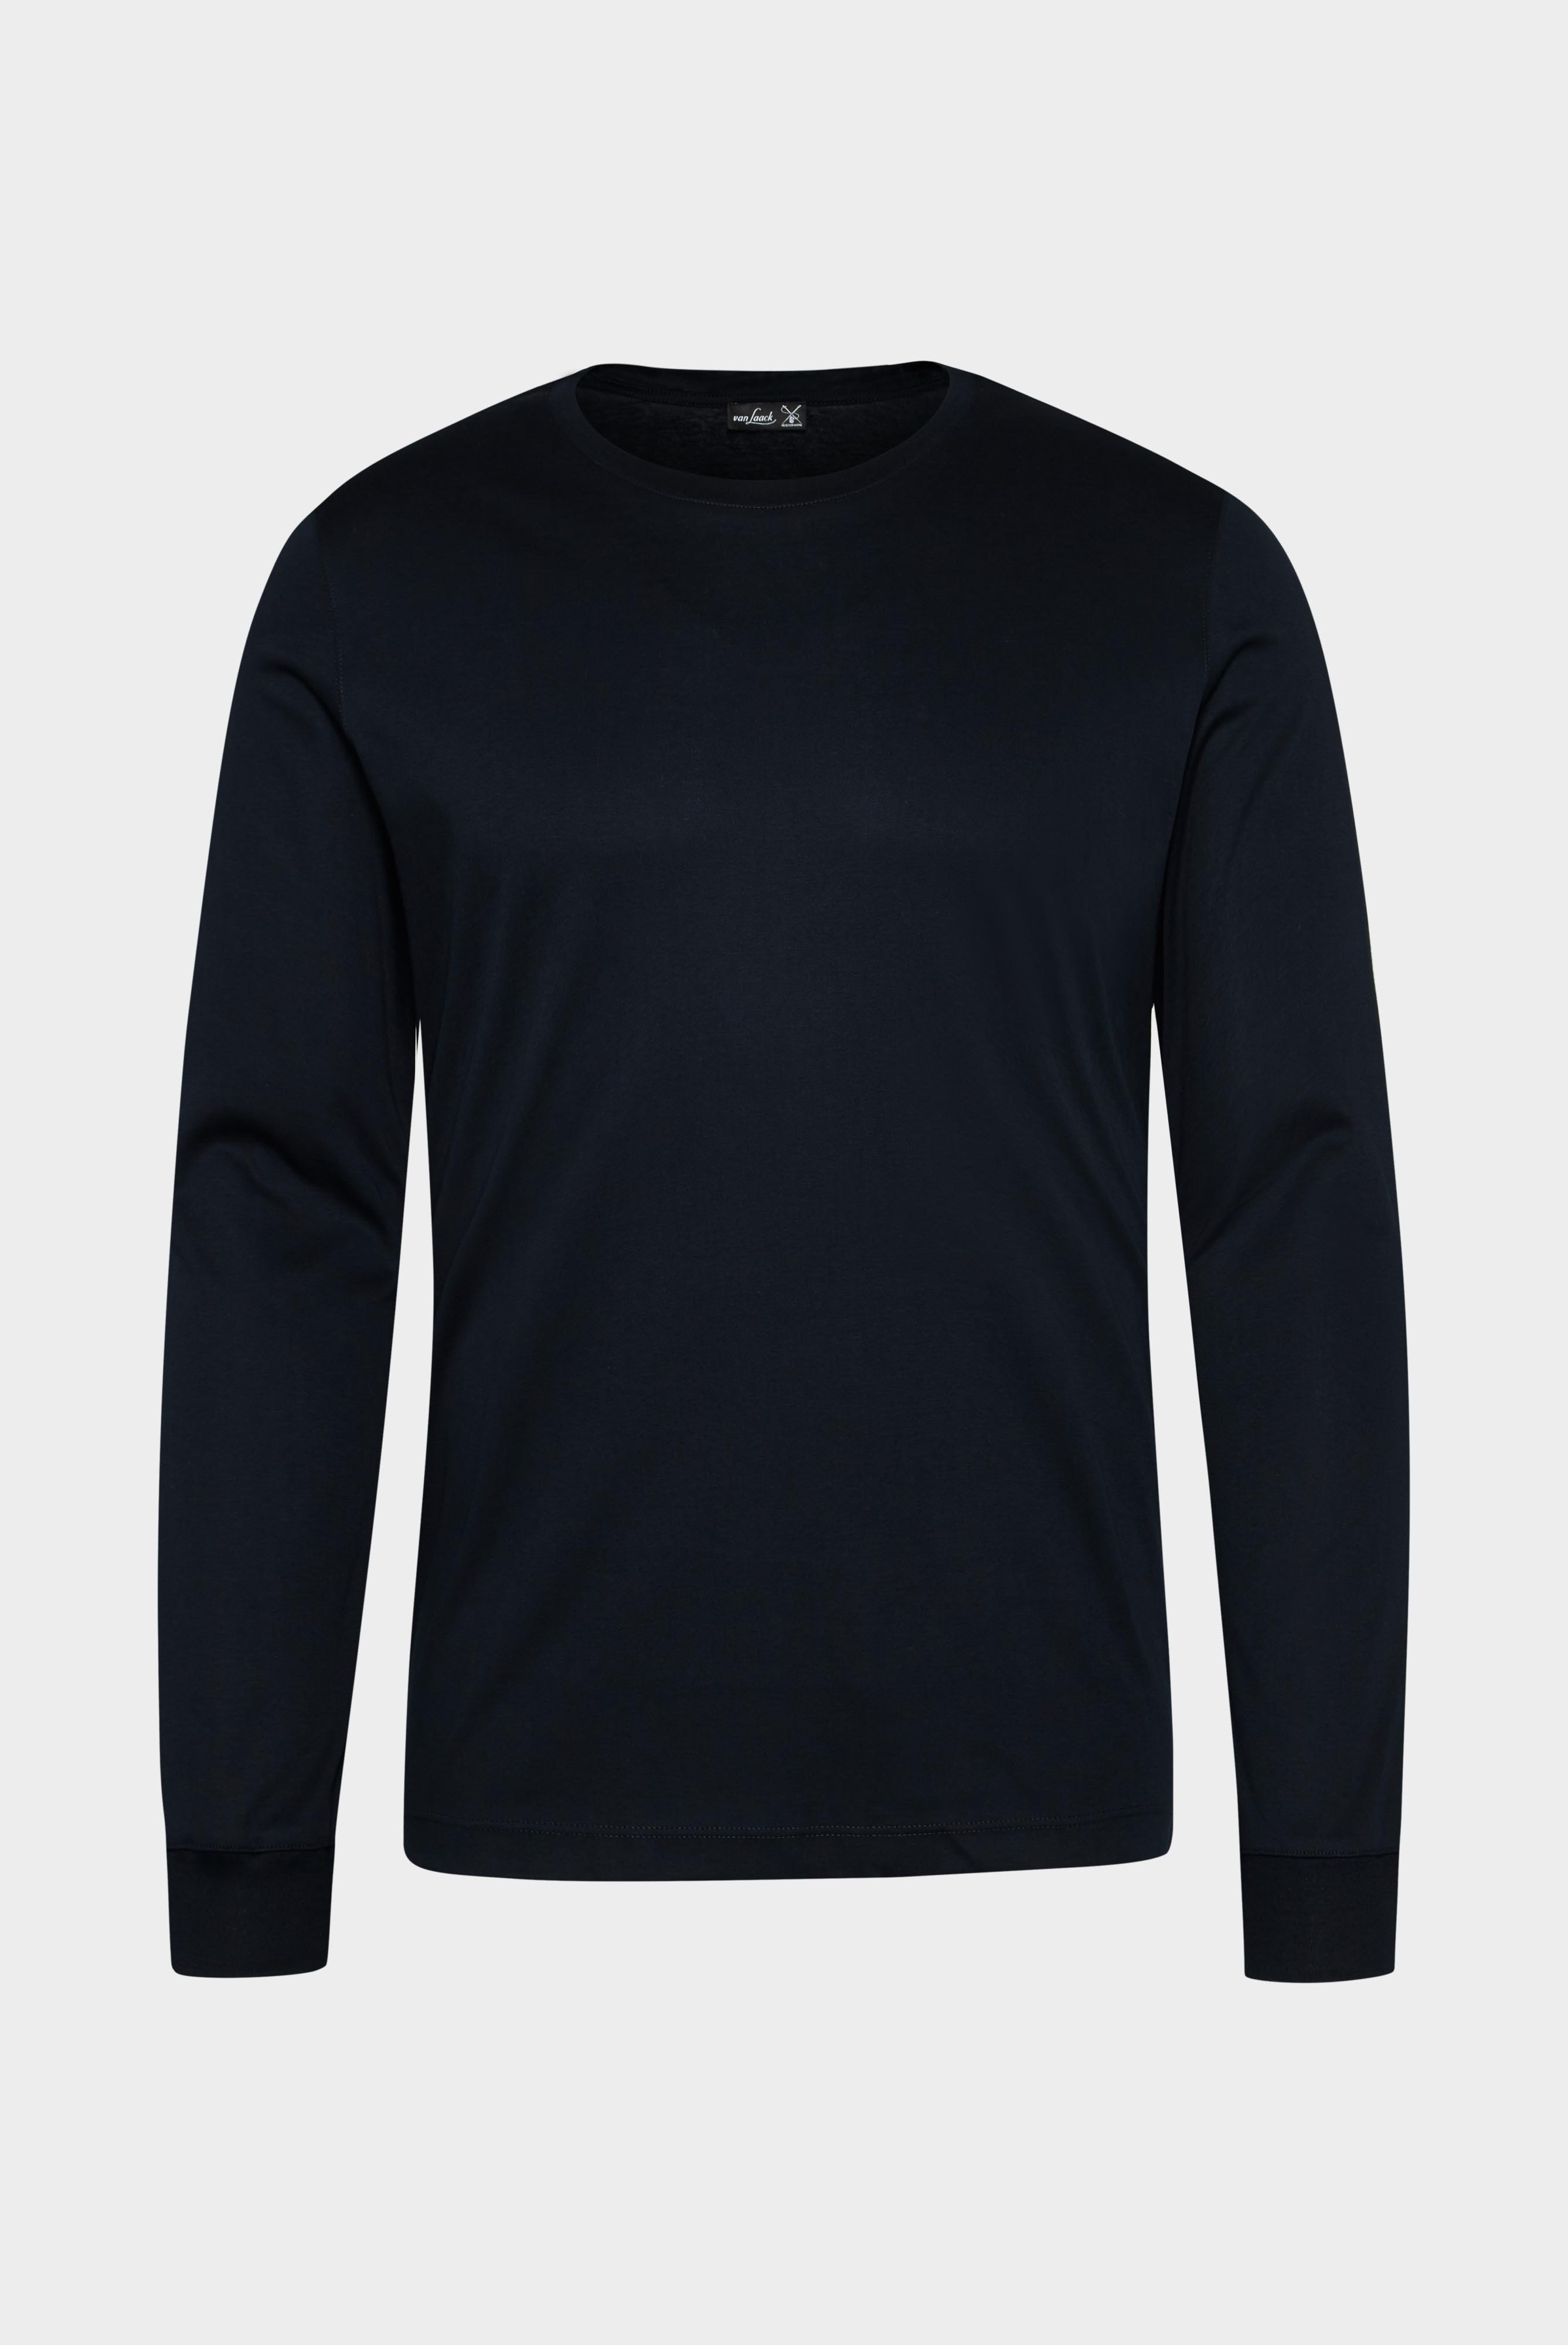 T-Shirts+Longsleeve Swiss Cotton Jersey Crew Neck T-Shirt+20.1718.UX.180031.790.X4L